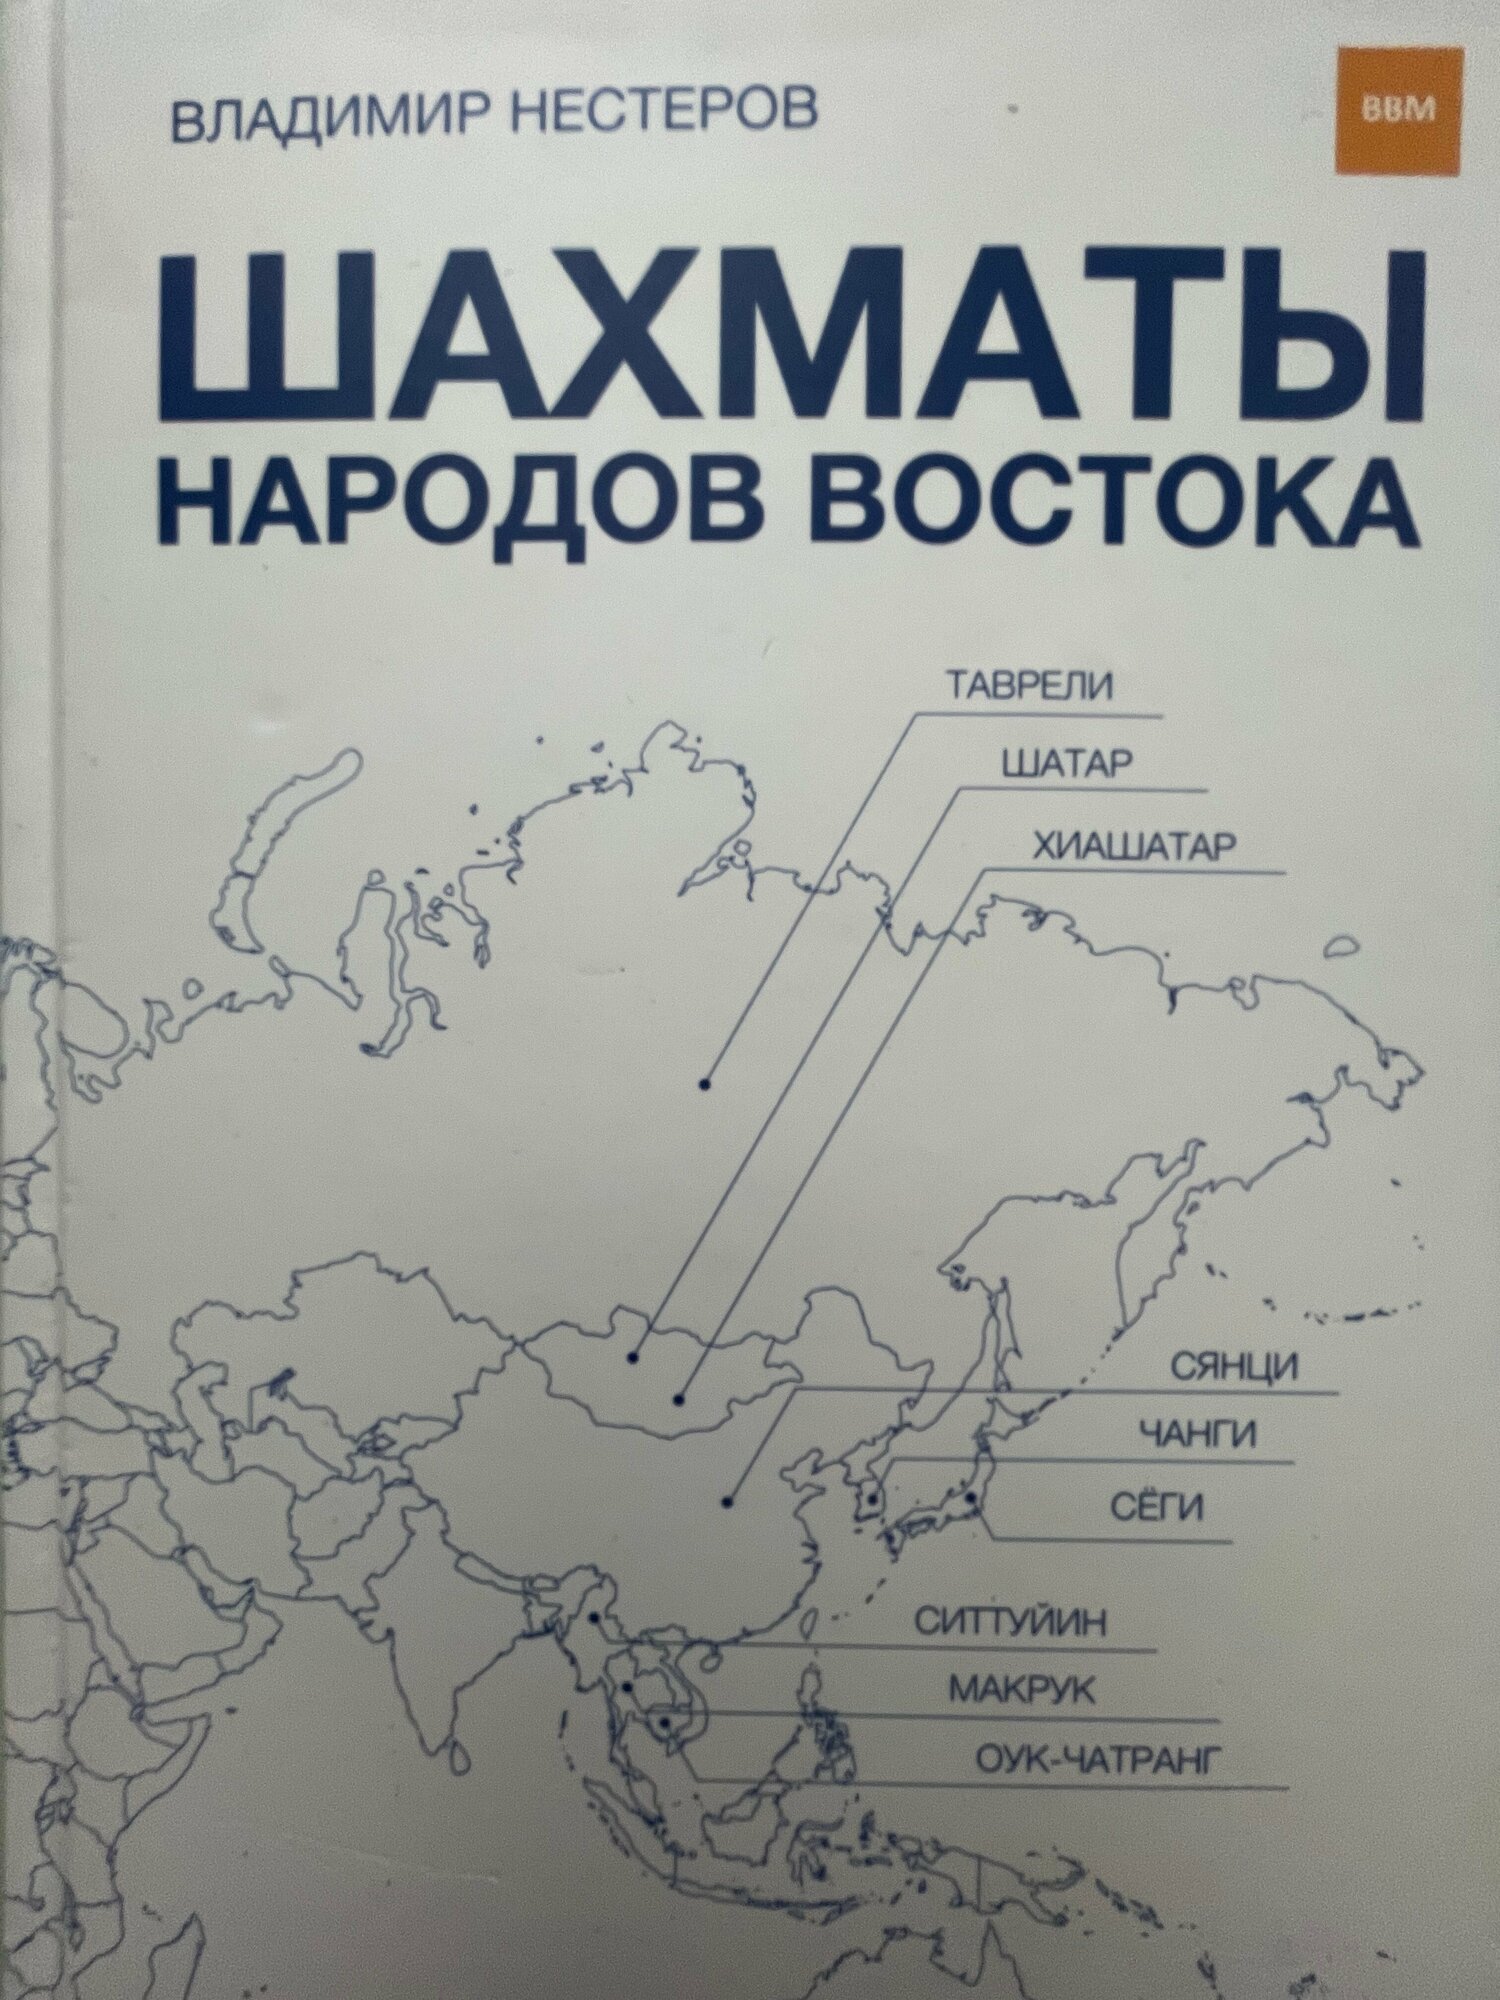 Книга по шахматам " Шахматы народов Востока "